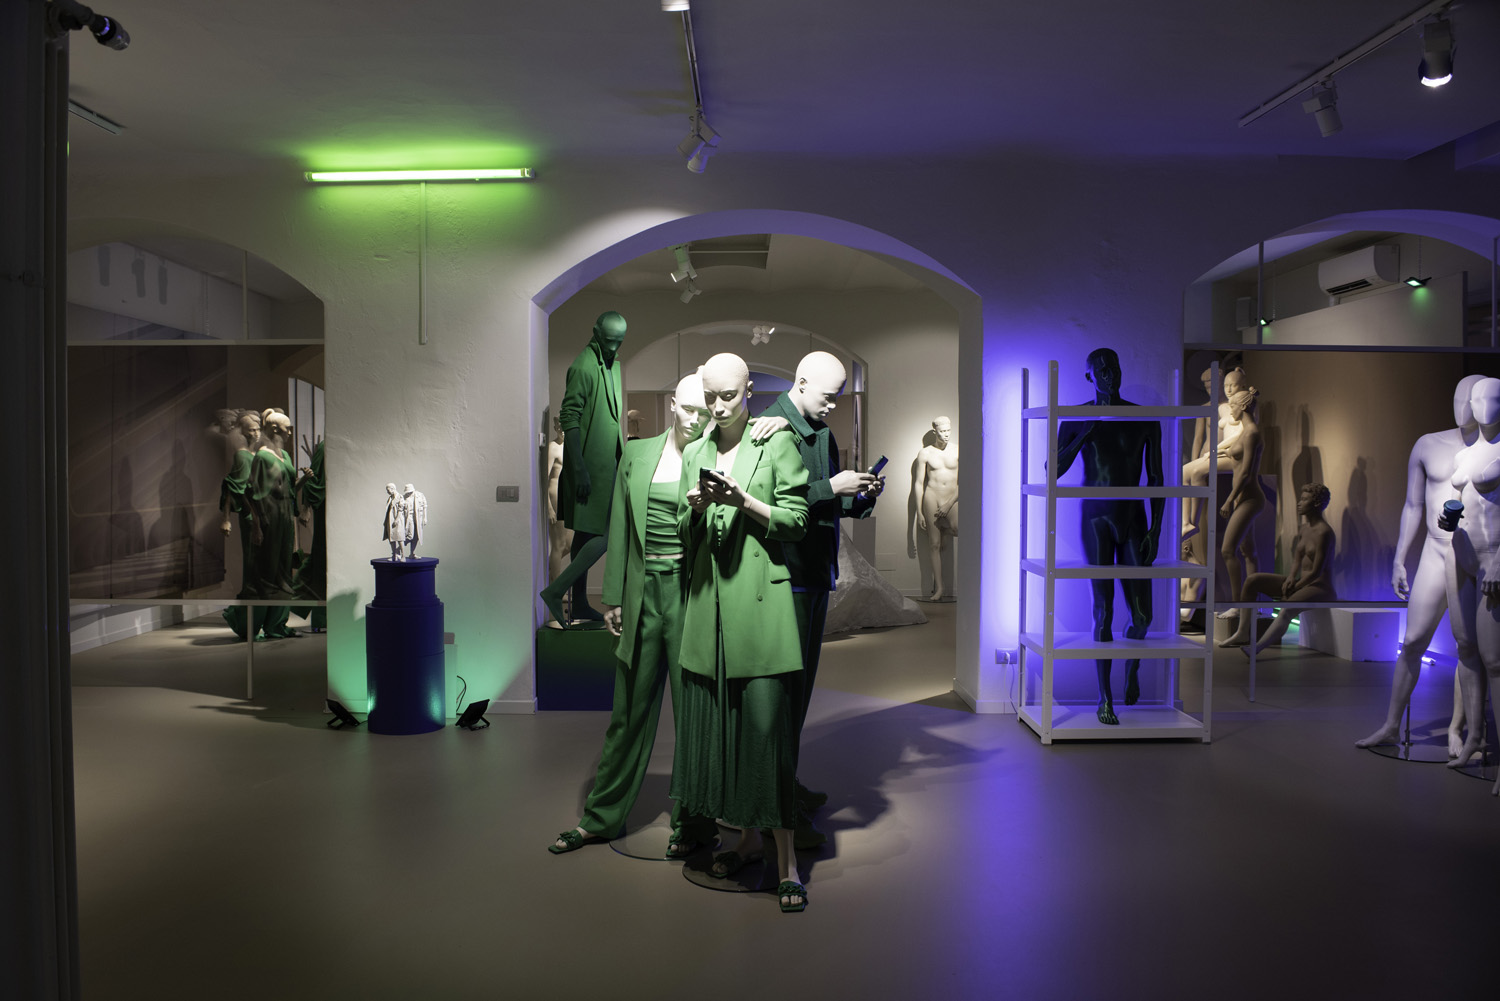 Hans Boodt Mannequins - Salone Story